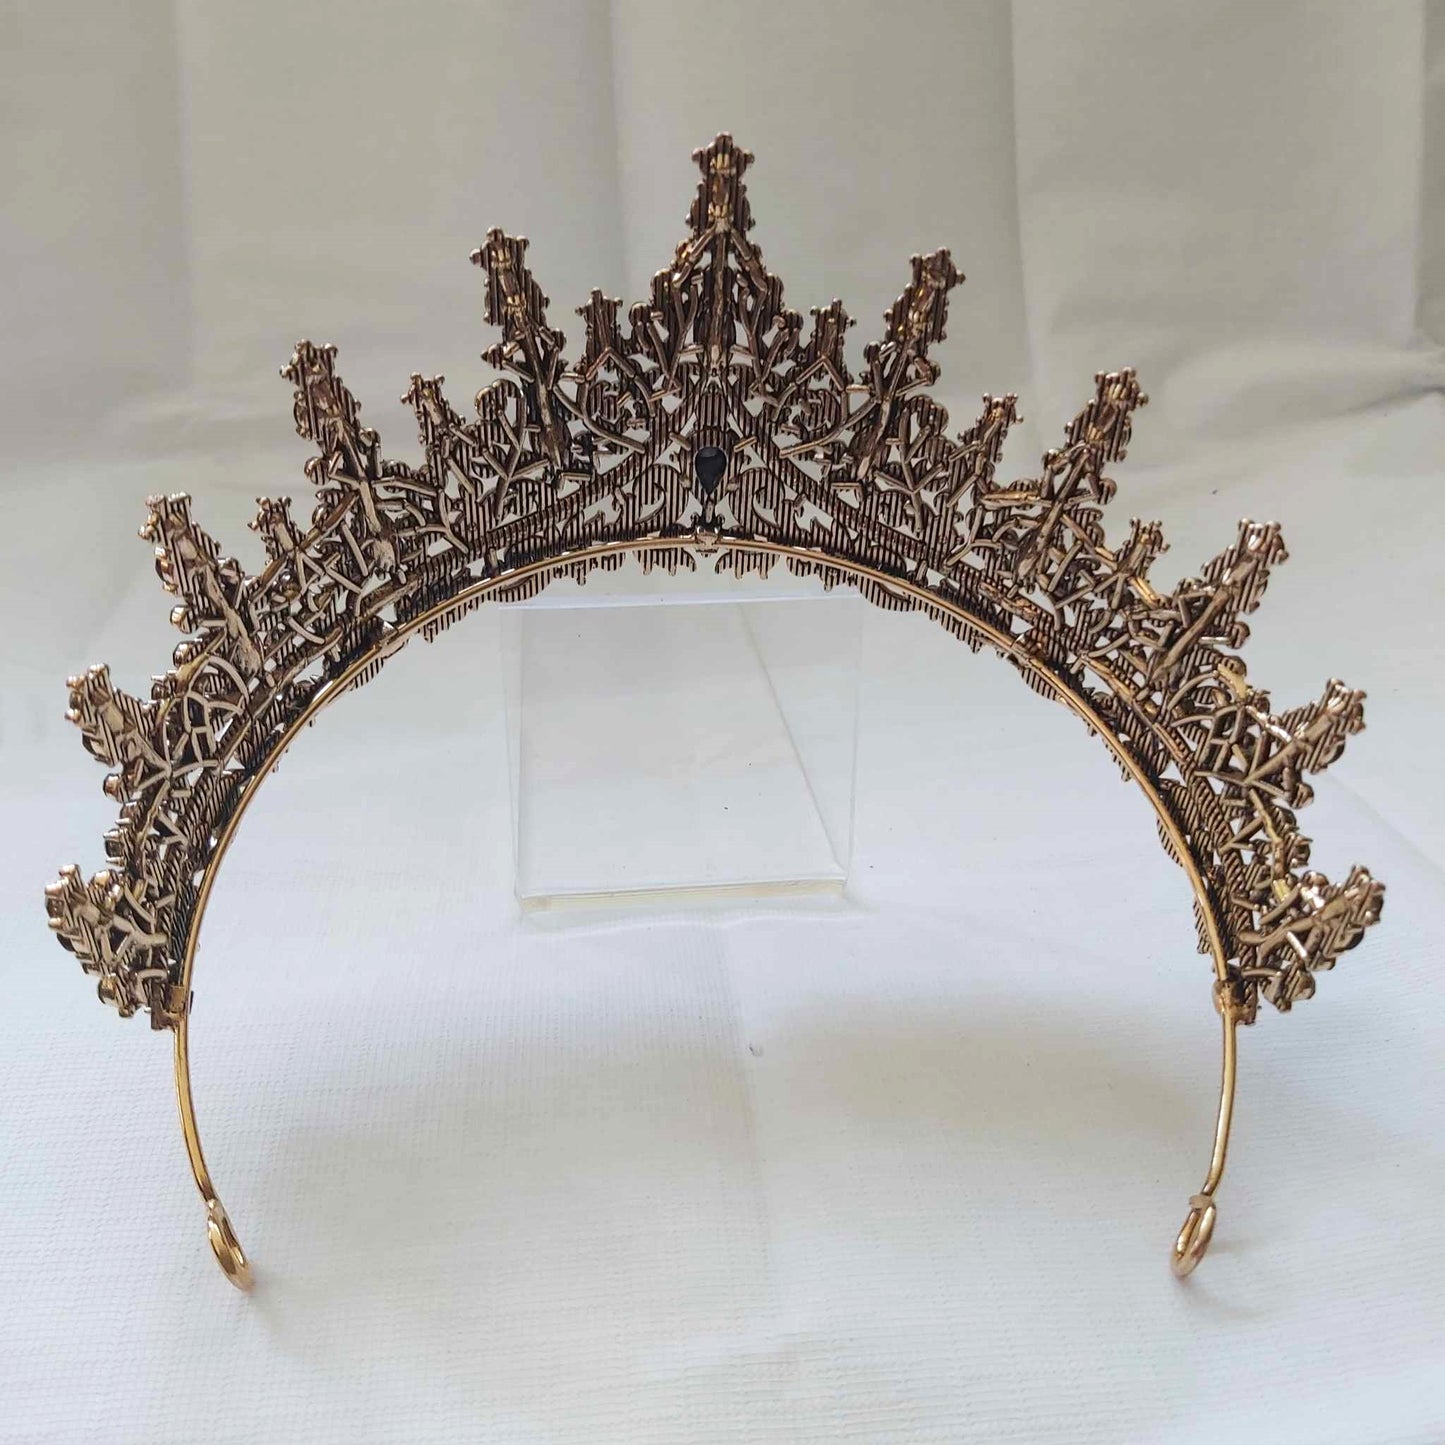 Black Rhinestones Crown Tiara Baroque (CR46)